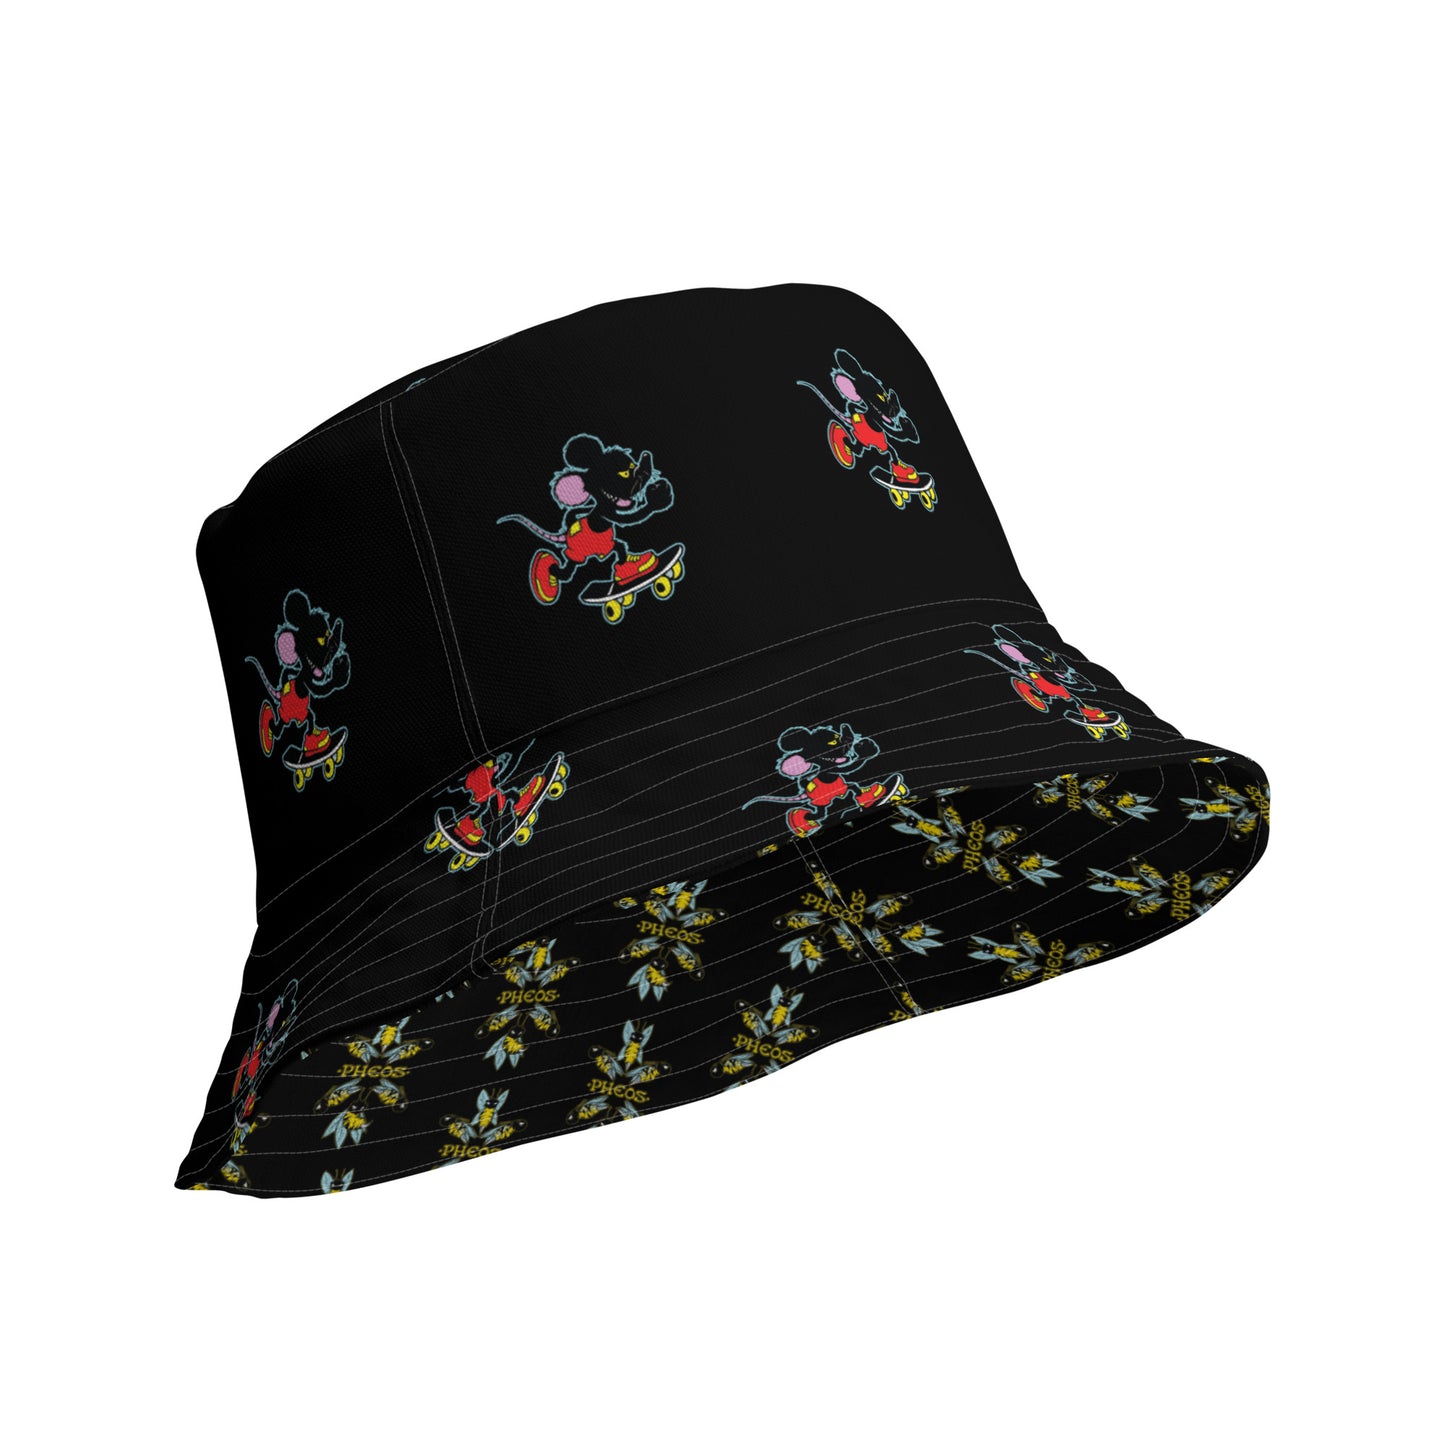 DOUBLE TROUBLE Reversible bucket hat